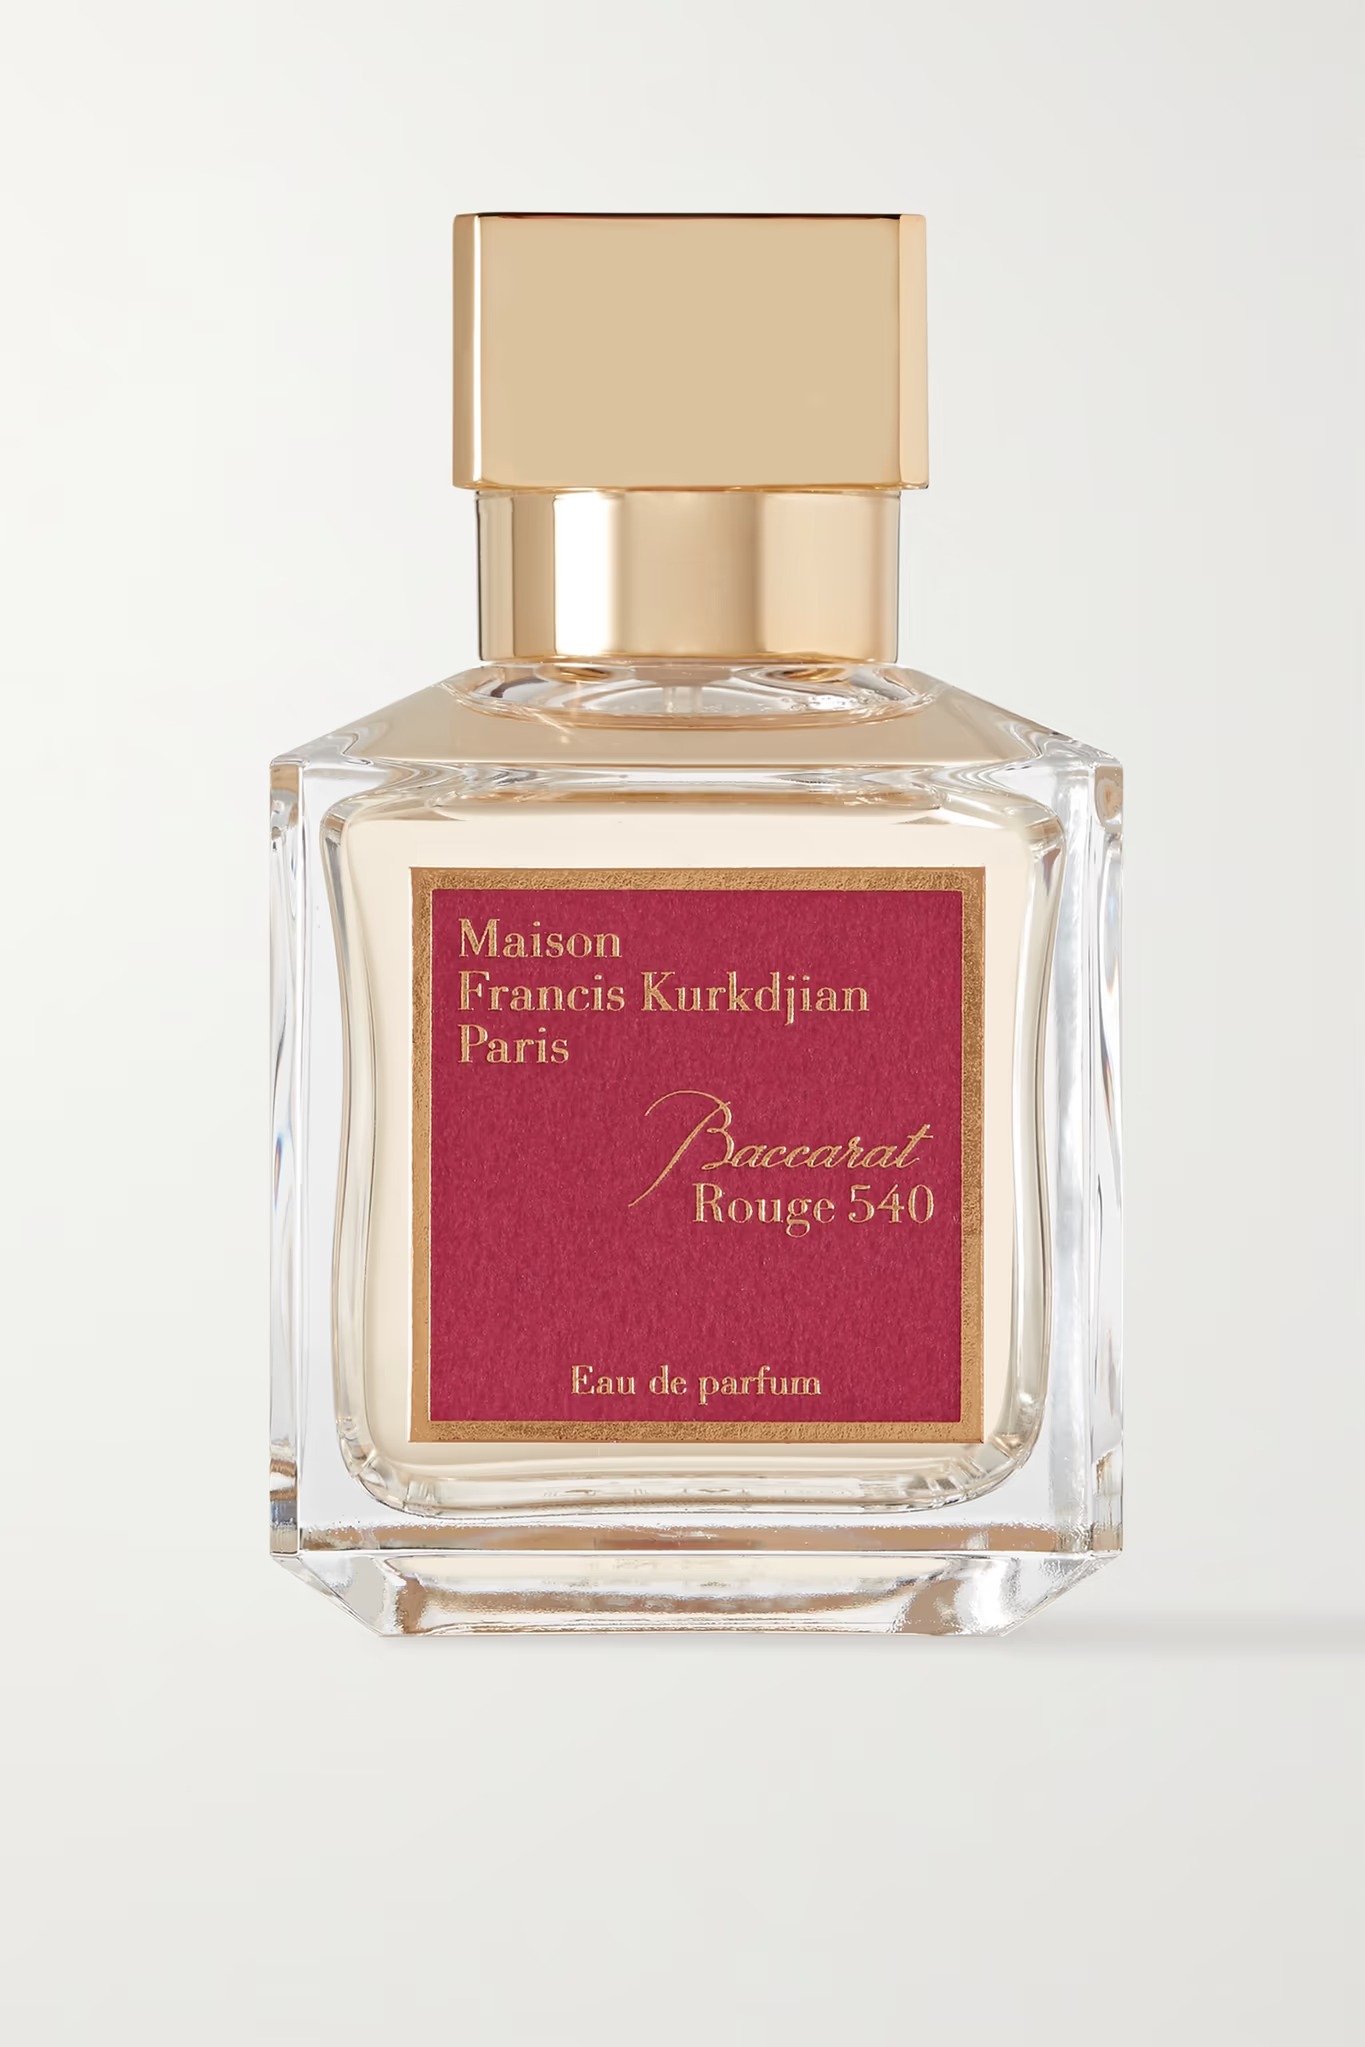 Chanel N°19 & Cristalle News ~ New Fragrances